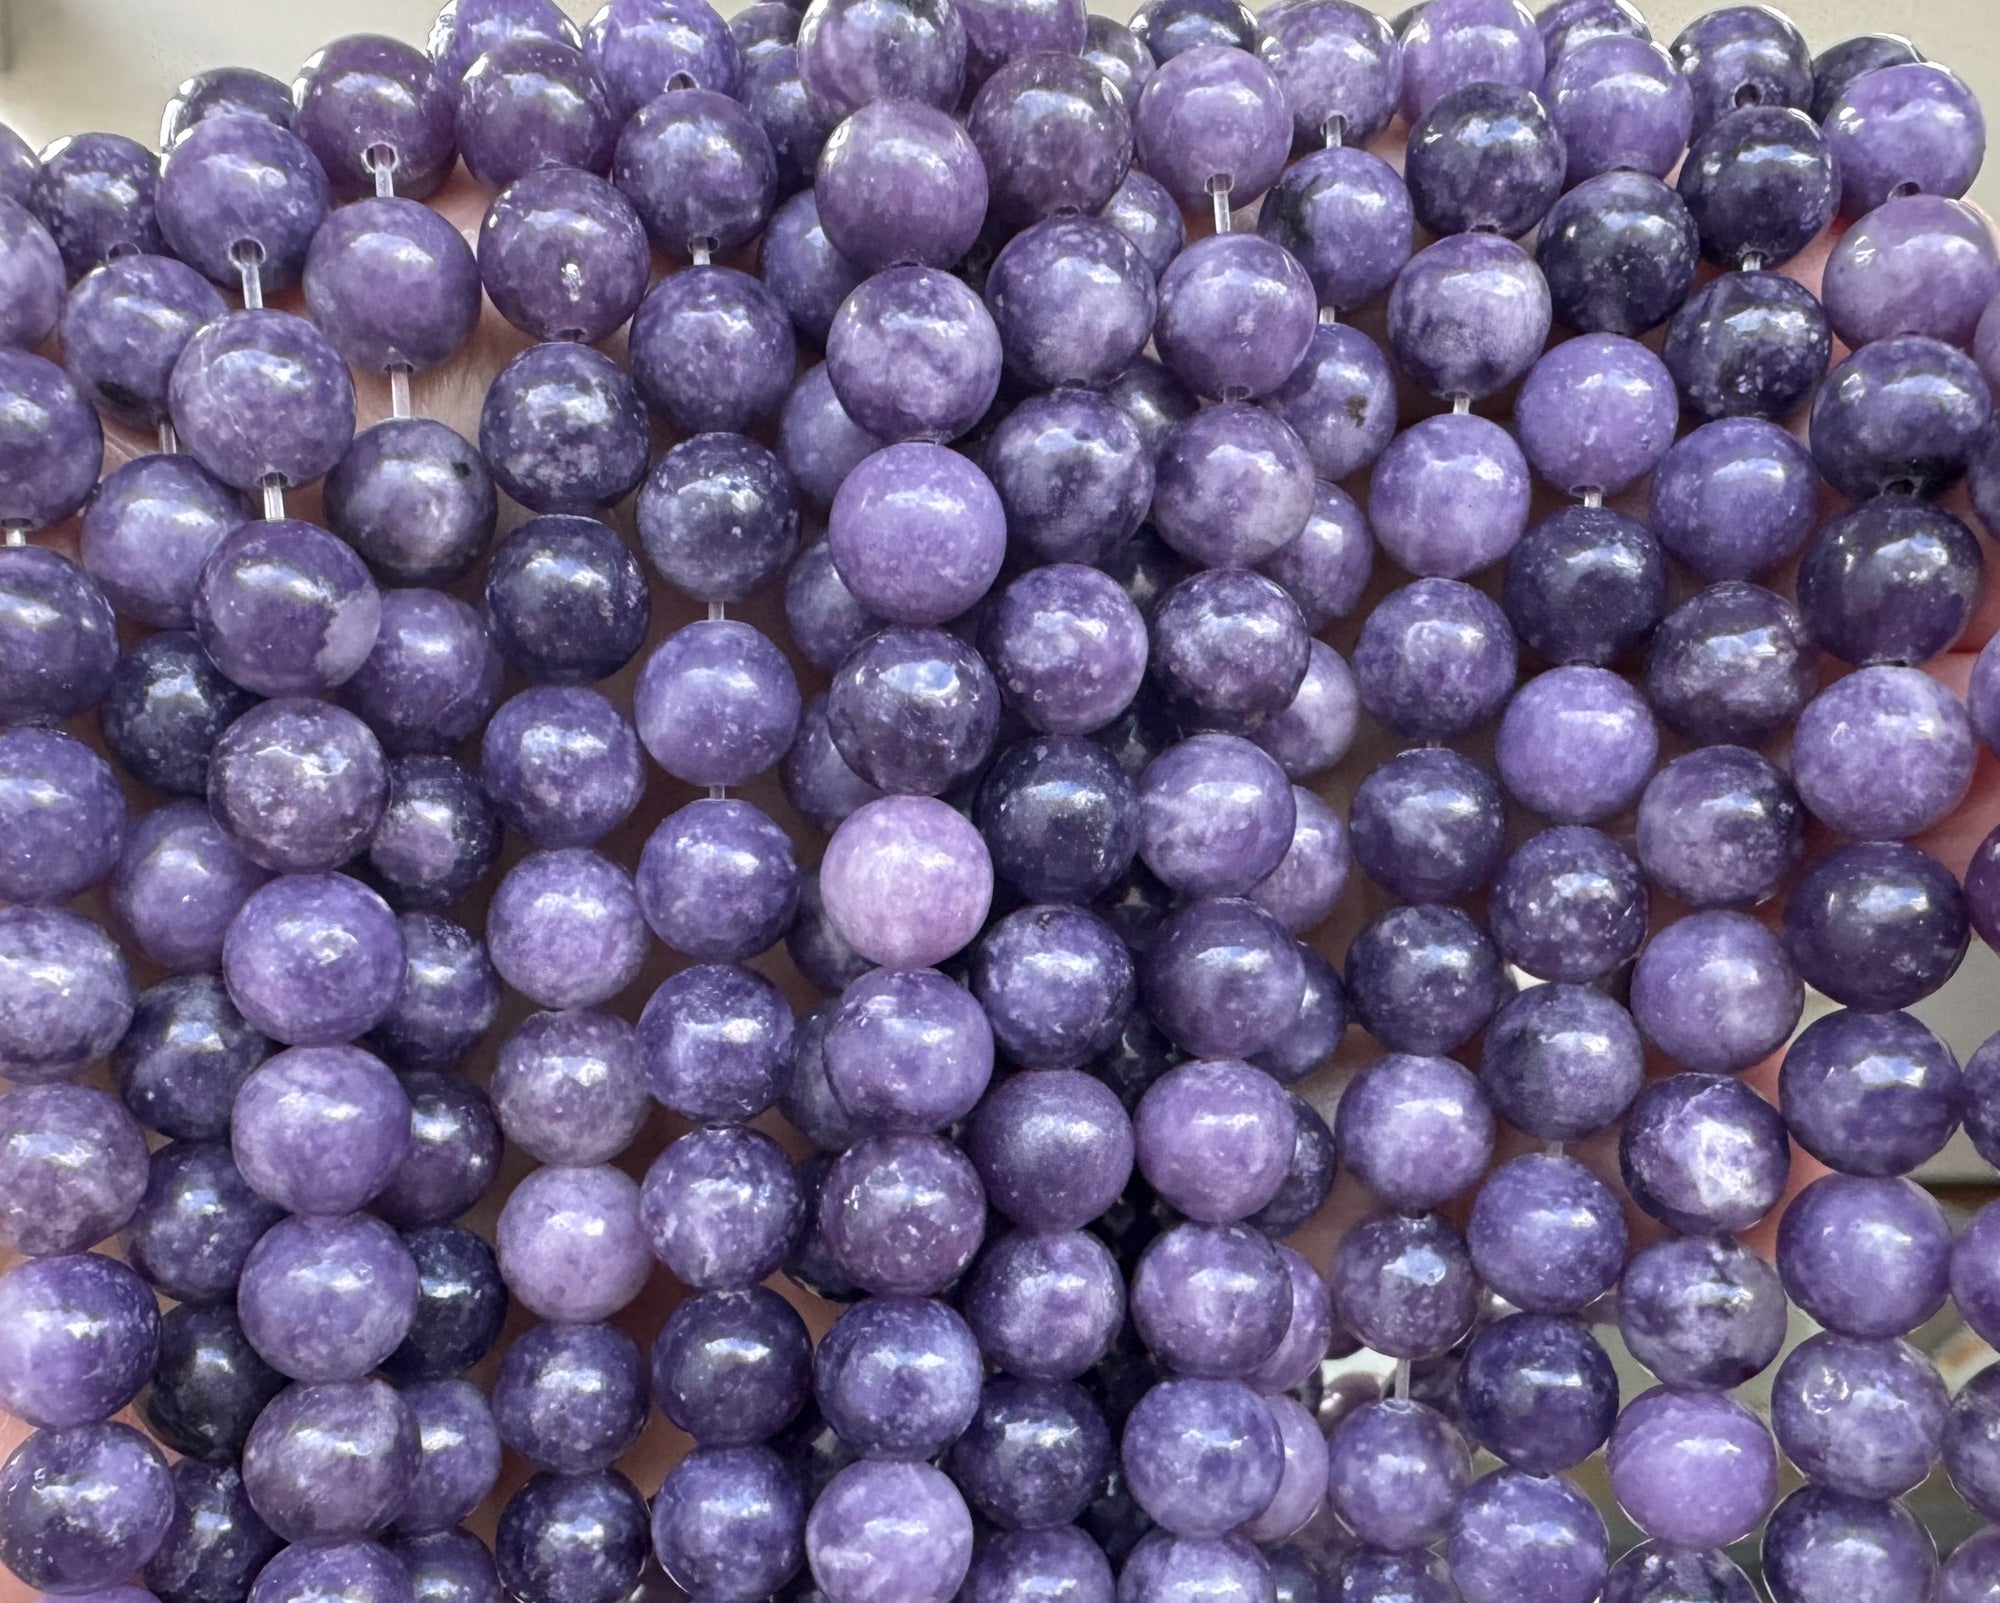 Purple Lepidolite 8mm round natural gemstone beads 15" strand